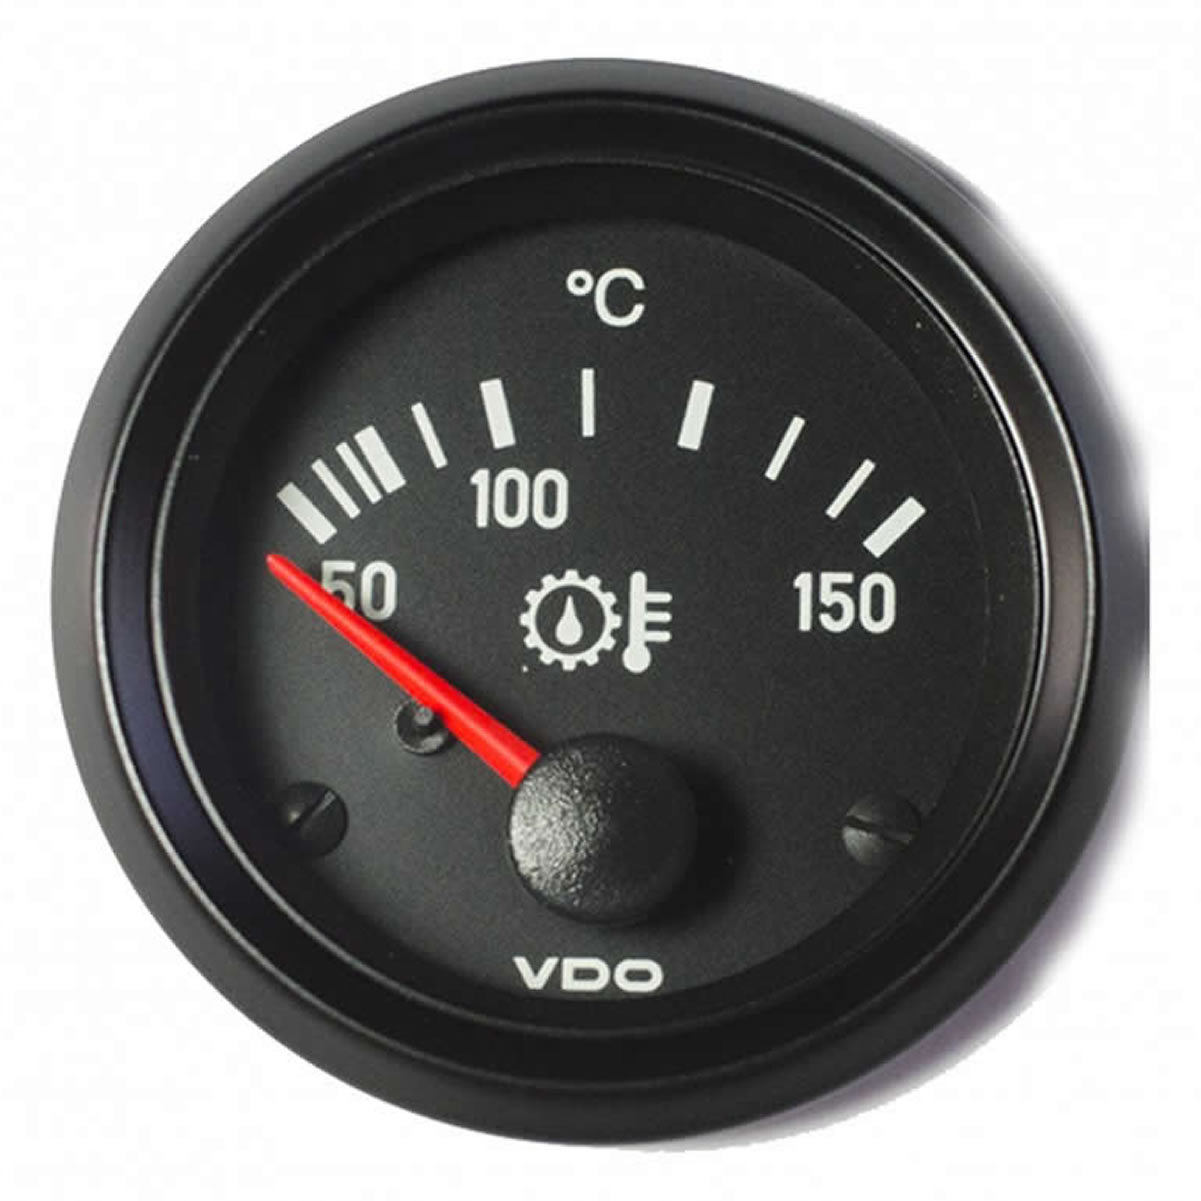 VDO Gear oil temperature 150C Gauge